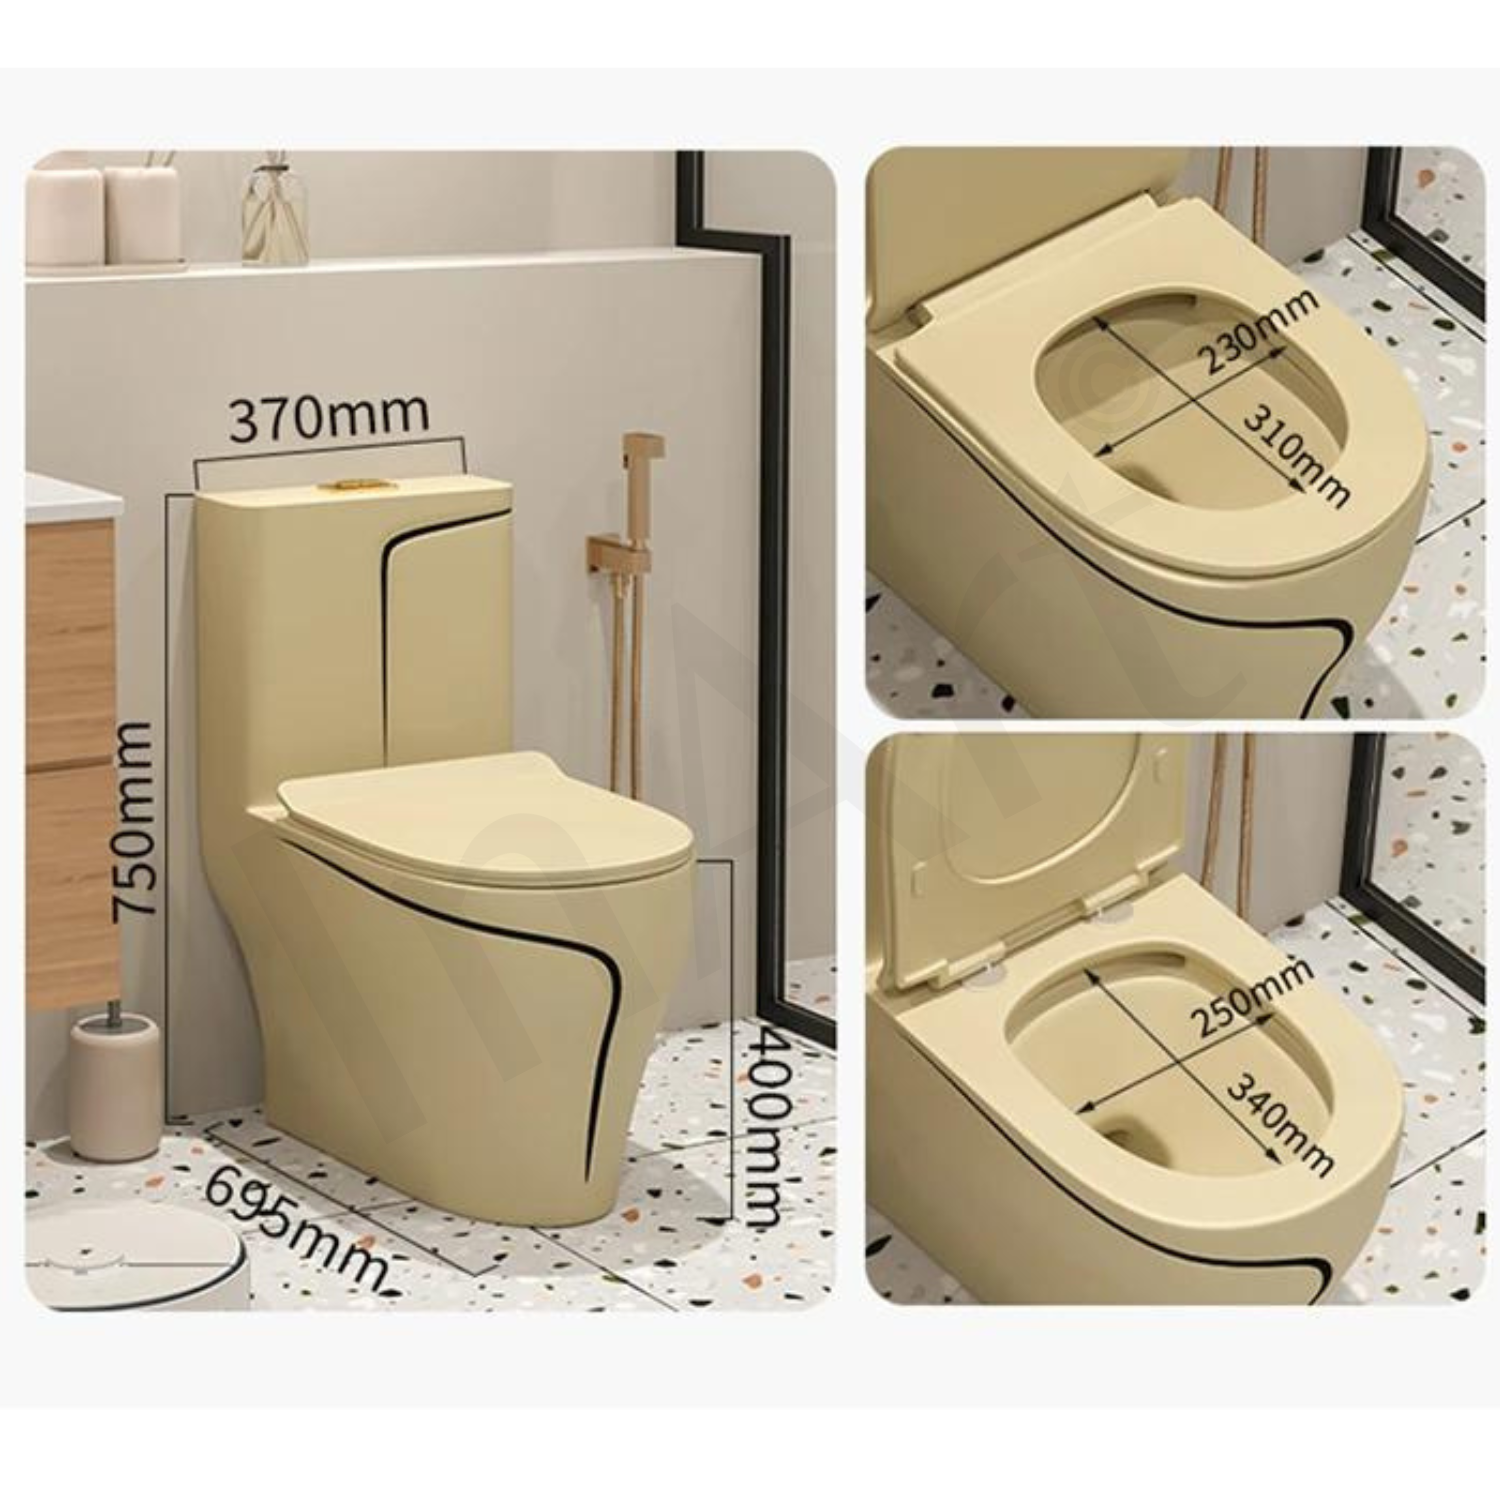 InArt Glossy Khaki Ceramic European Water Closet | Oval Floor Mounted Western Toilet EWC S Trap | 69x39x74 cm | Soft Close Hydraulic Seat and Dual Flush Tank - InArt-Studio